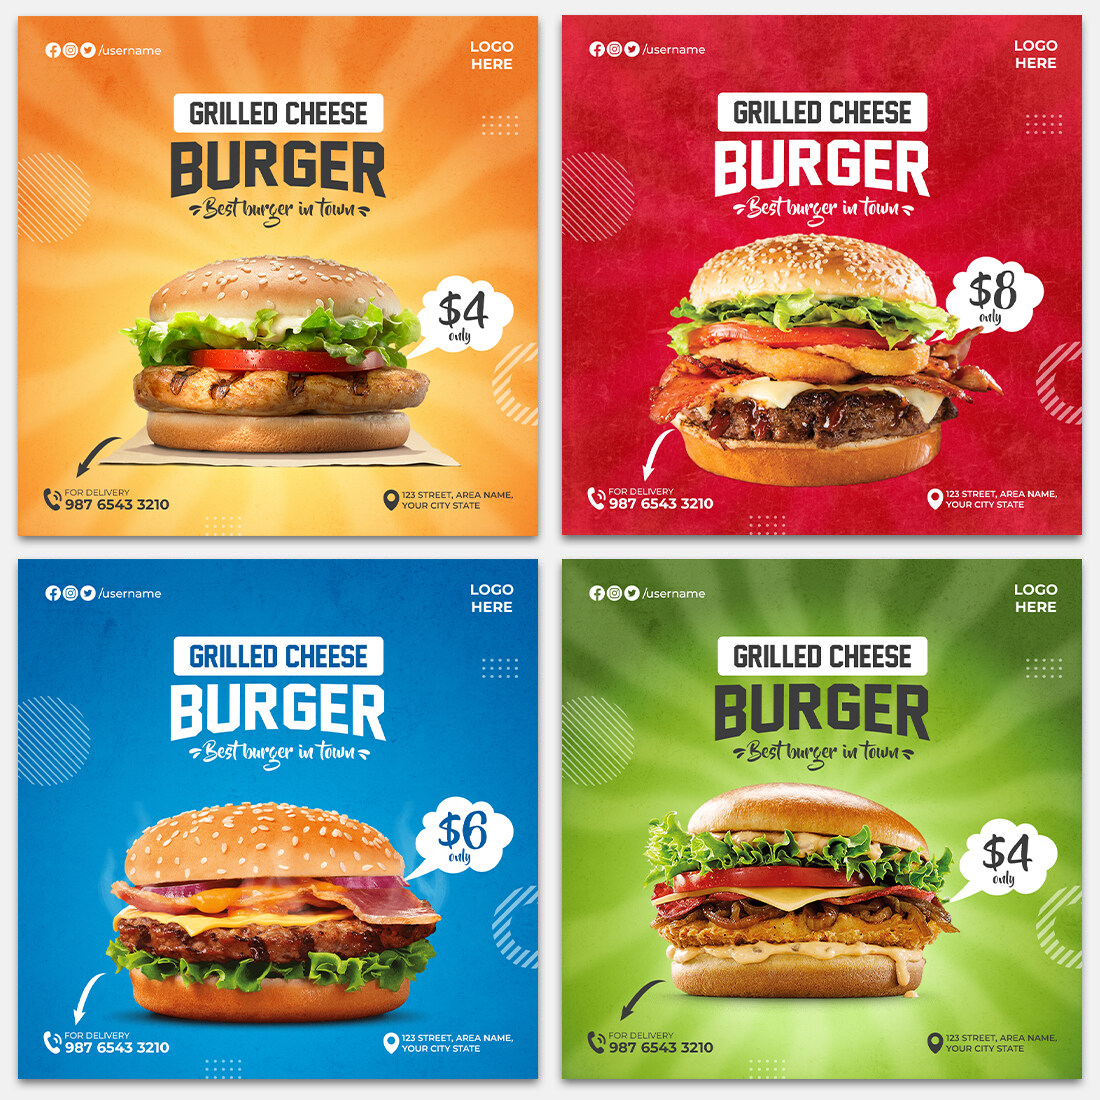 4 Cheese Burger Restaurant Social Media Banner Templates cover image.